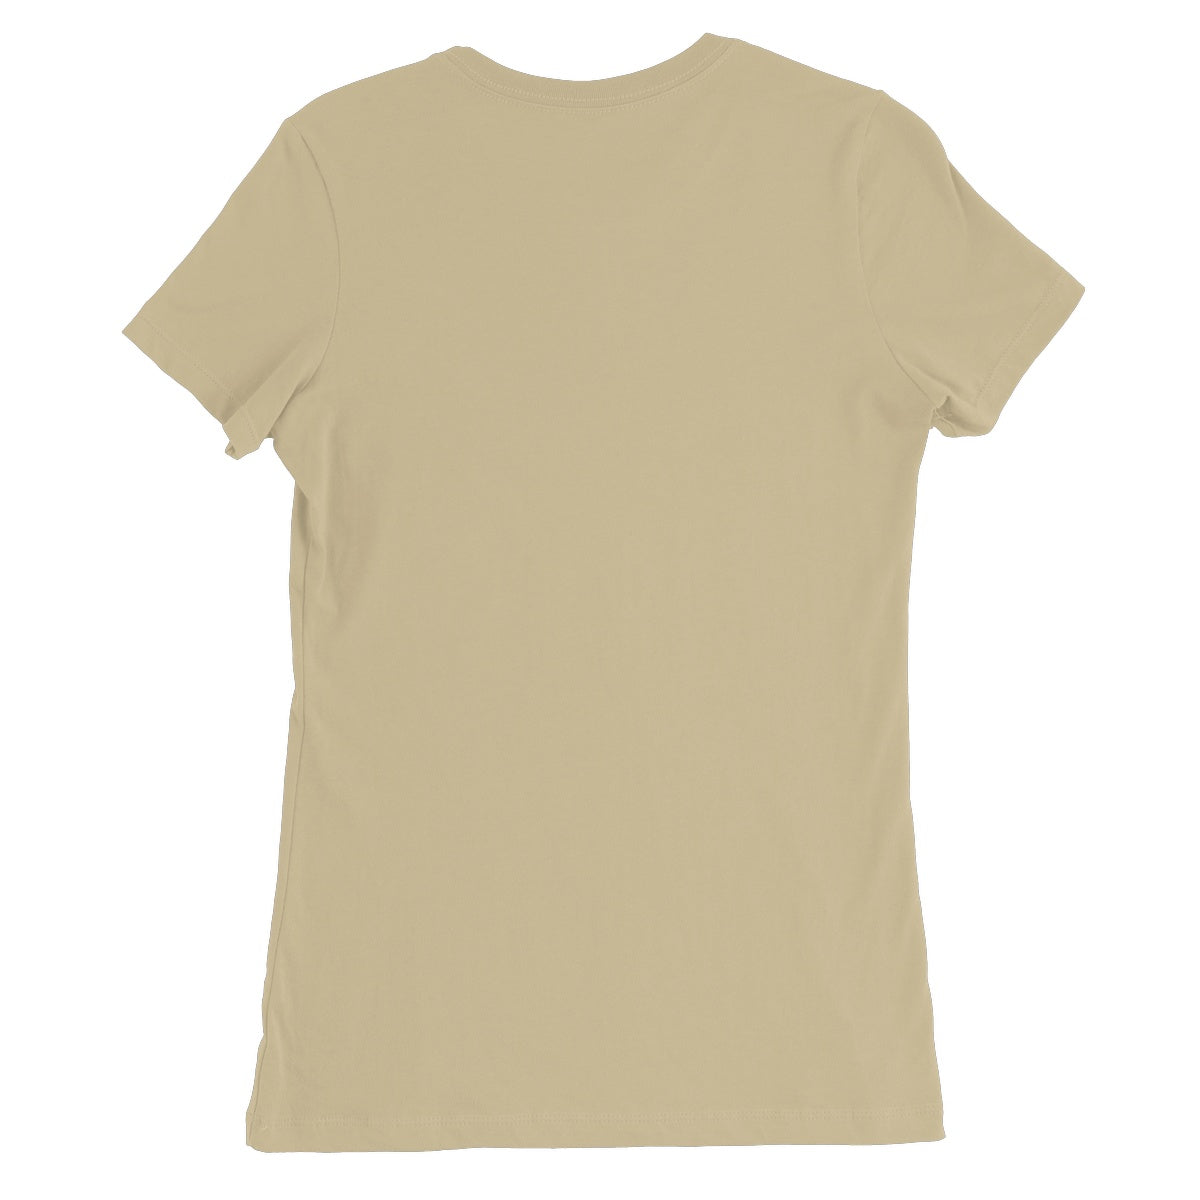 Möbius Flow, Autumn Sphere Women's Favourite T-Shirt